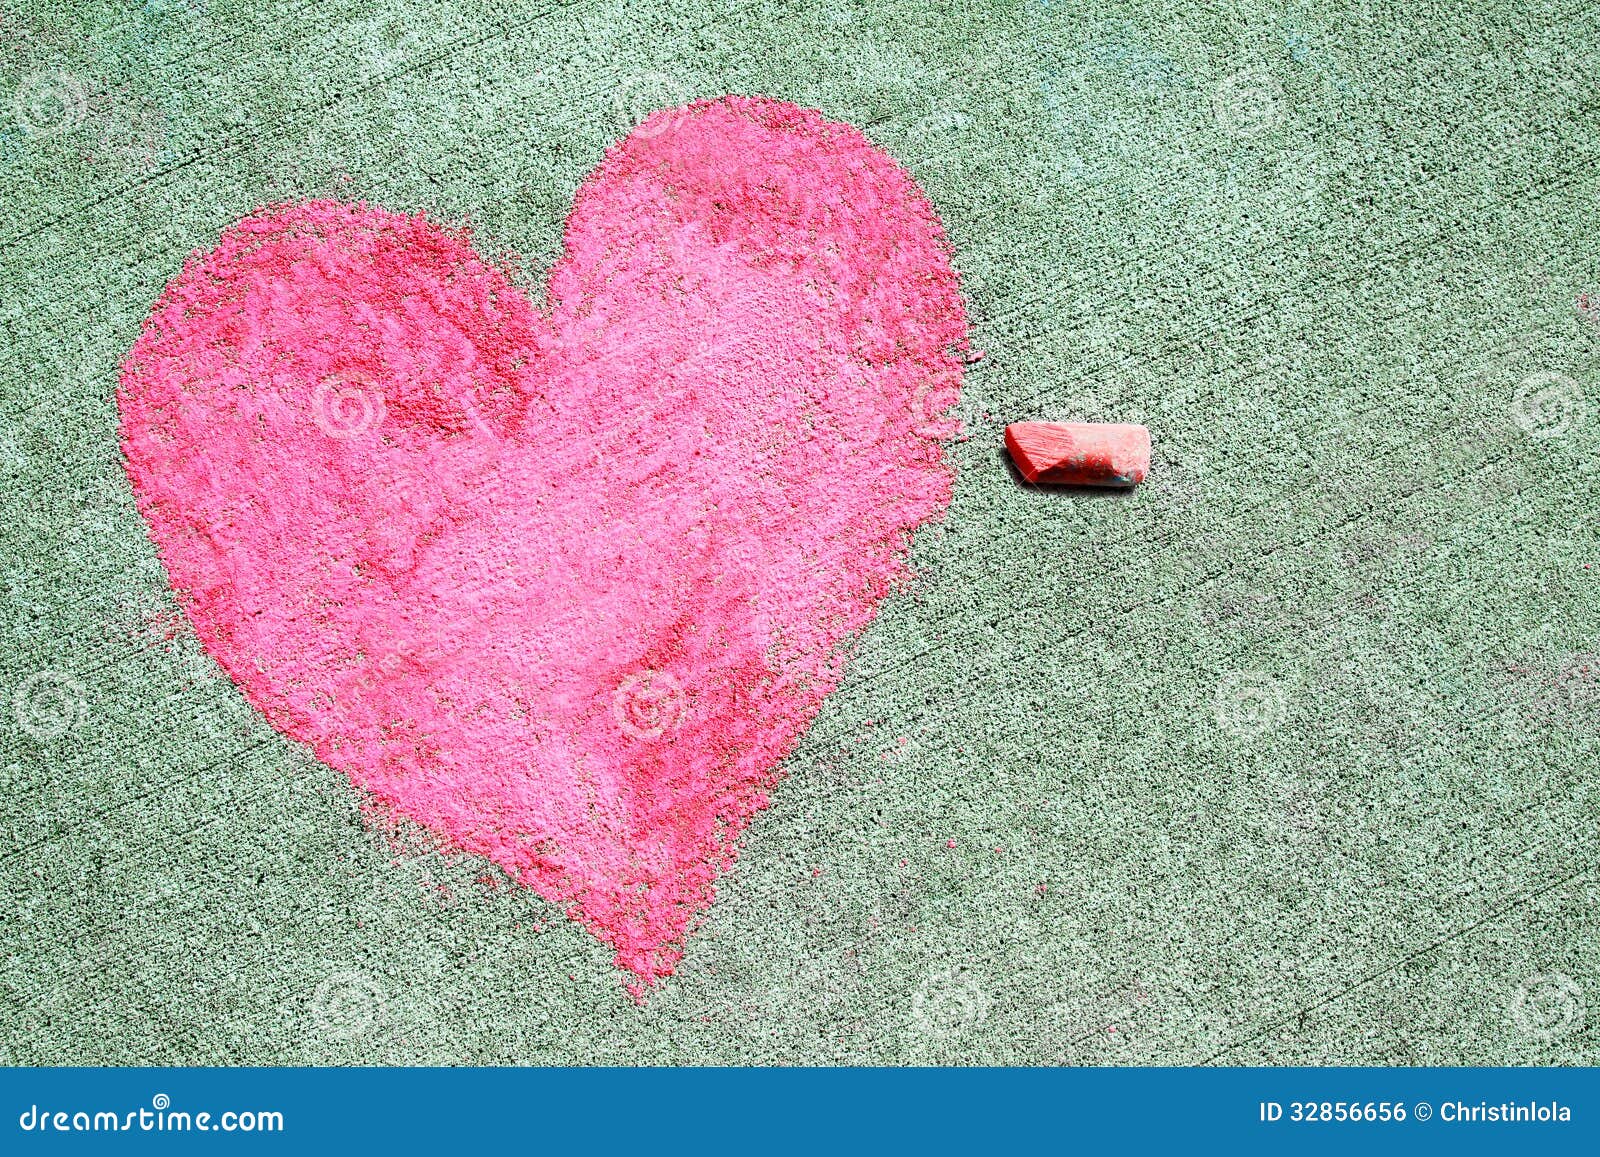 chalk heart pink symbol drawn sidewalk outside 32856656